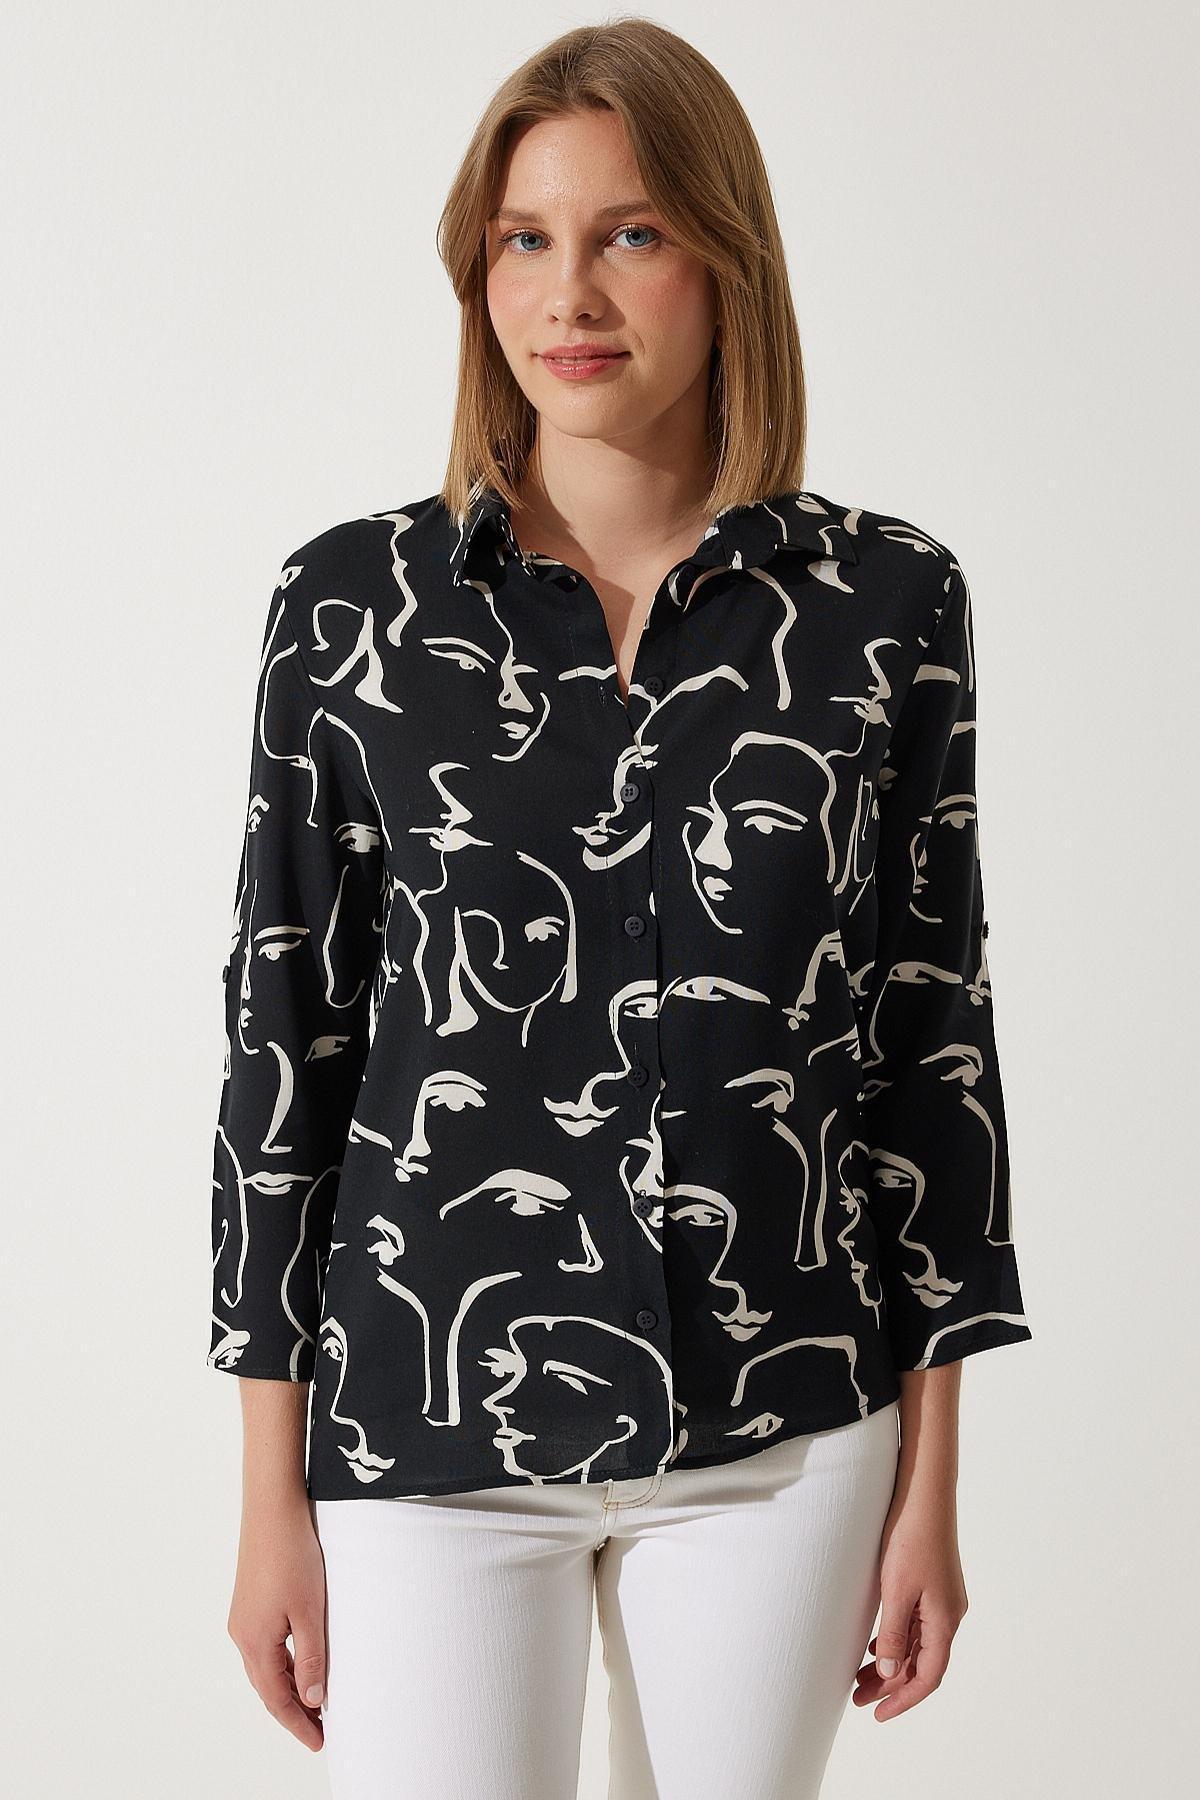 Happiness Istanbul - Black Animal Print Collared Shirt